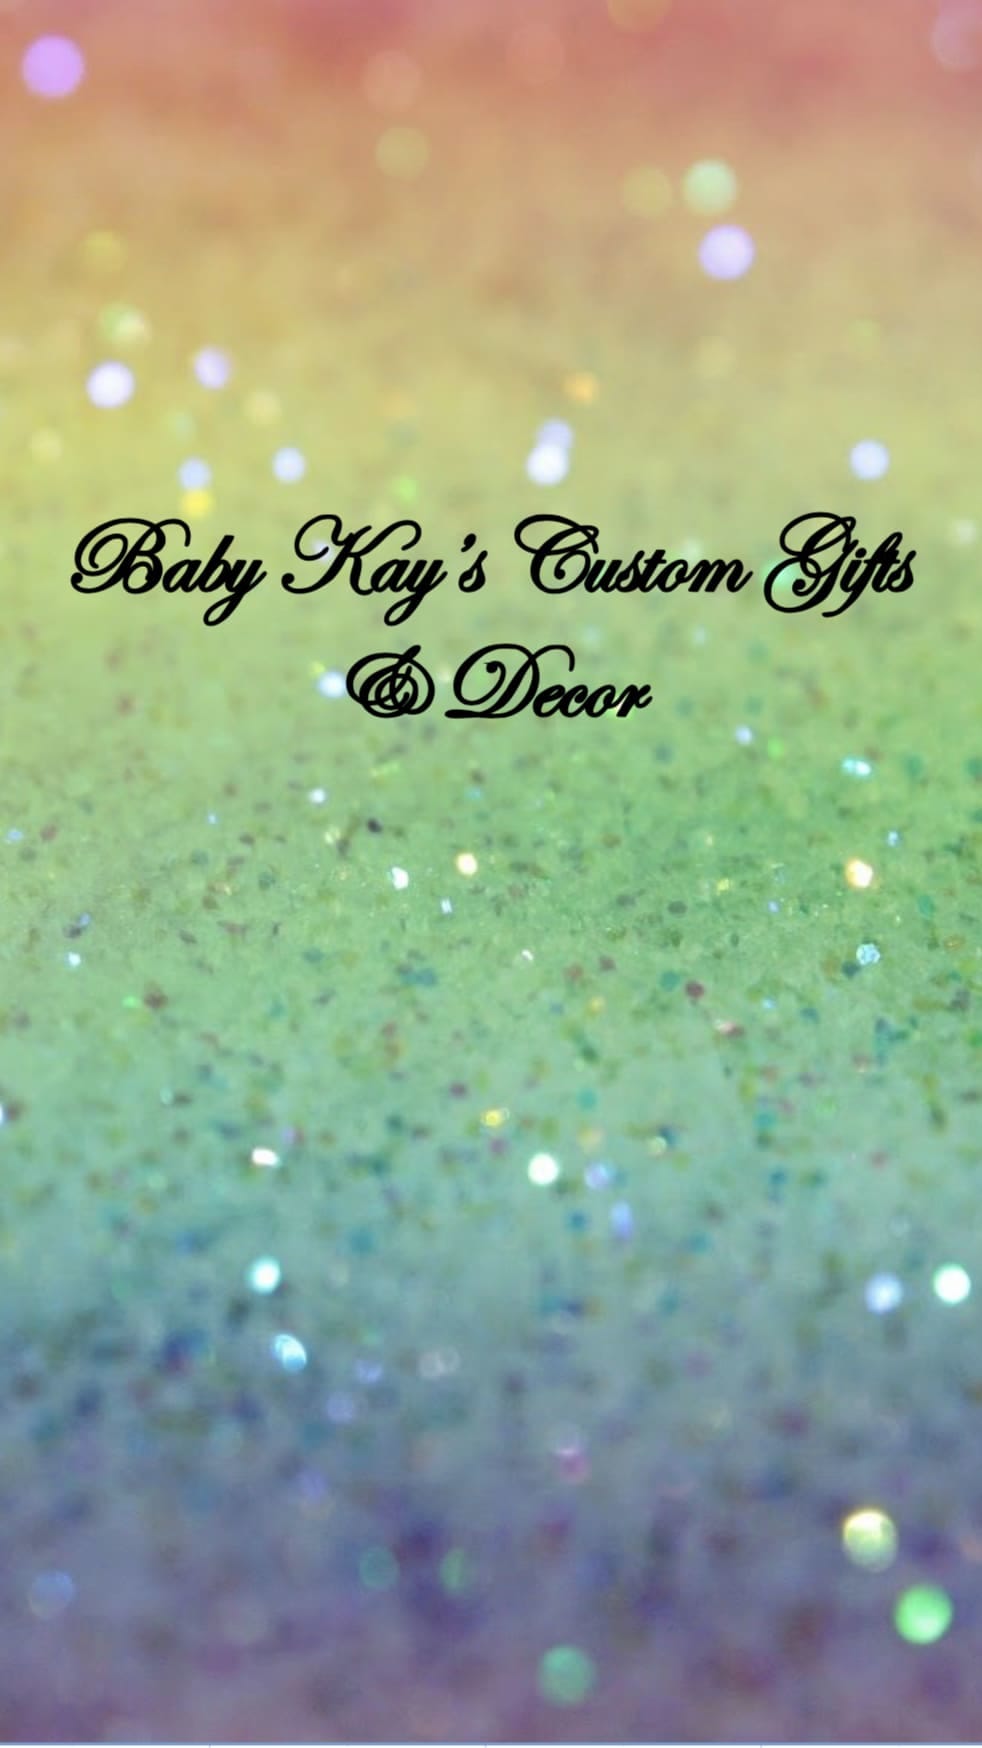 Baby Kay’s Custom Gifts and Decor